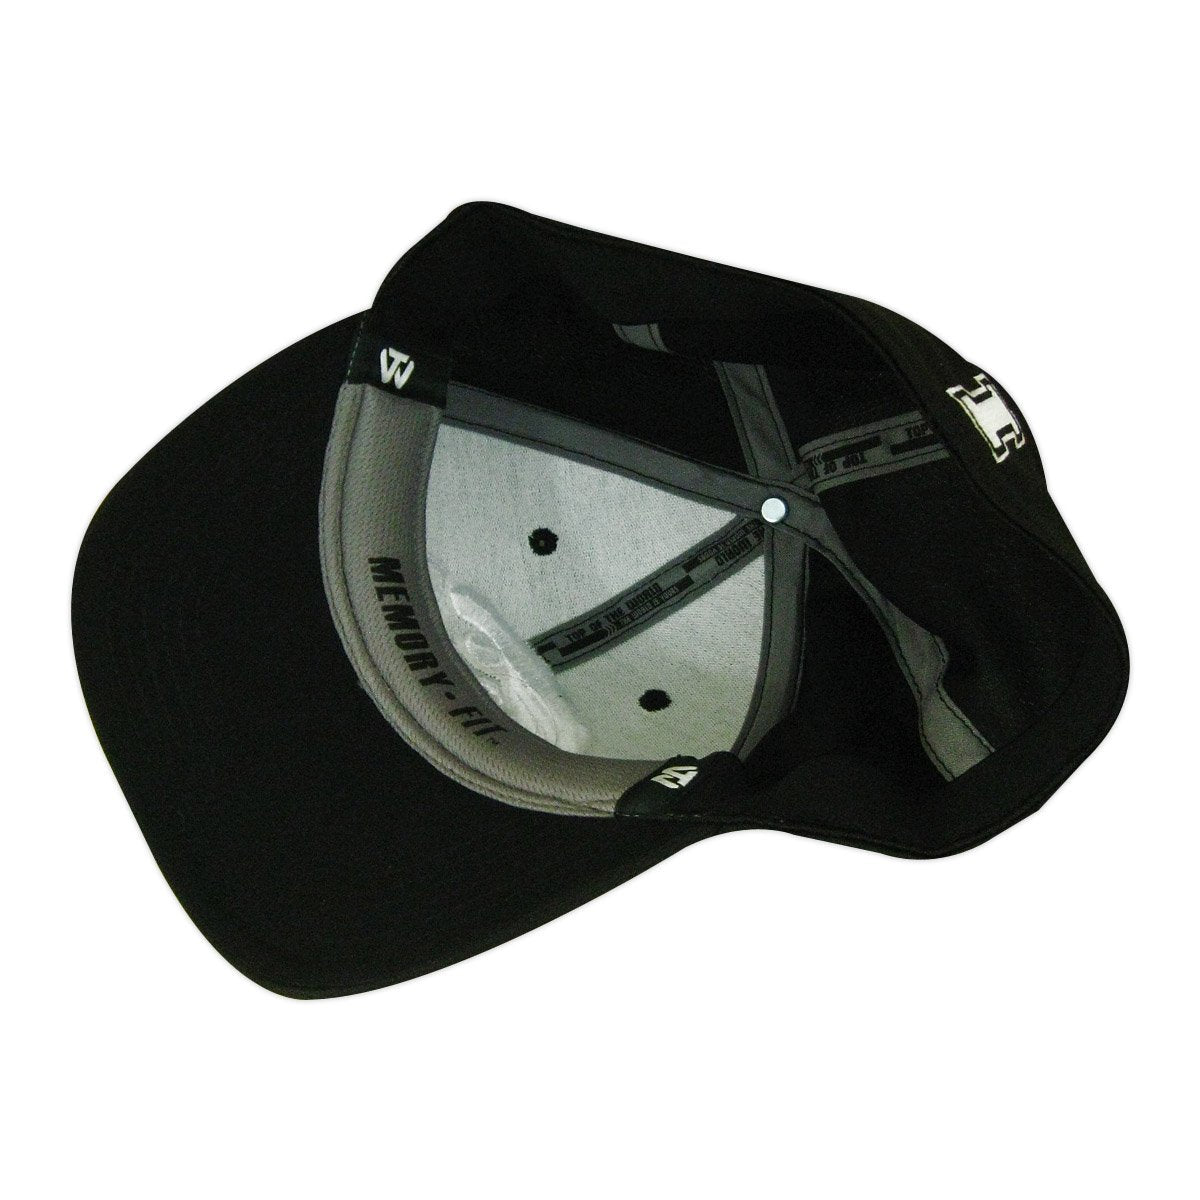 NCAA Iowa Hawkeyes Ultrasonic Black One Fit Flex Hat